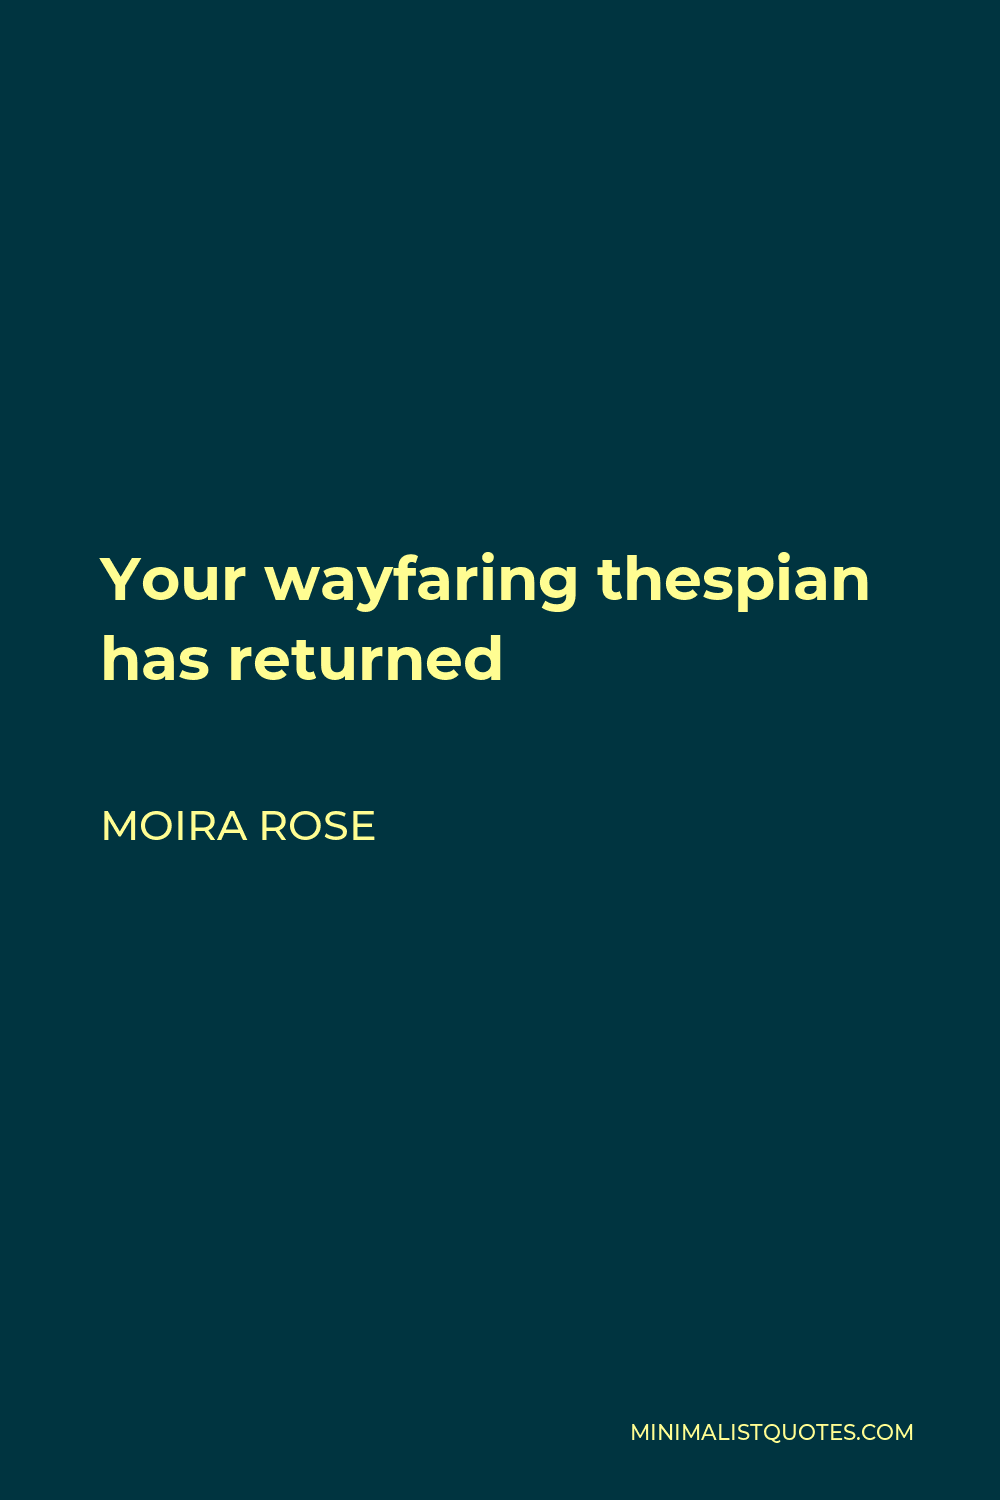 Moira Rose Quote - Your wayfaring thespian has returned